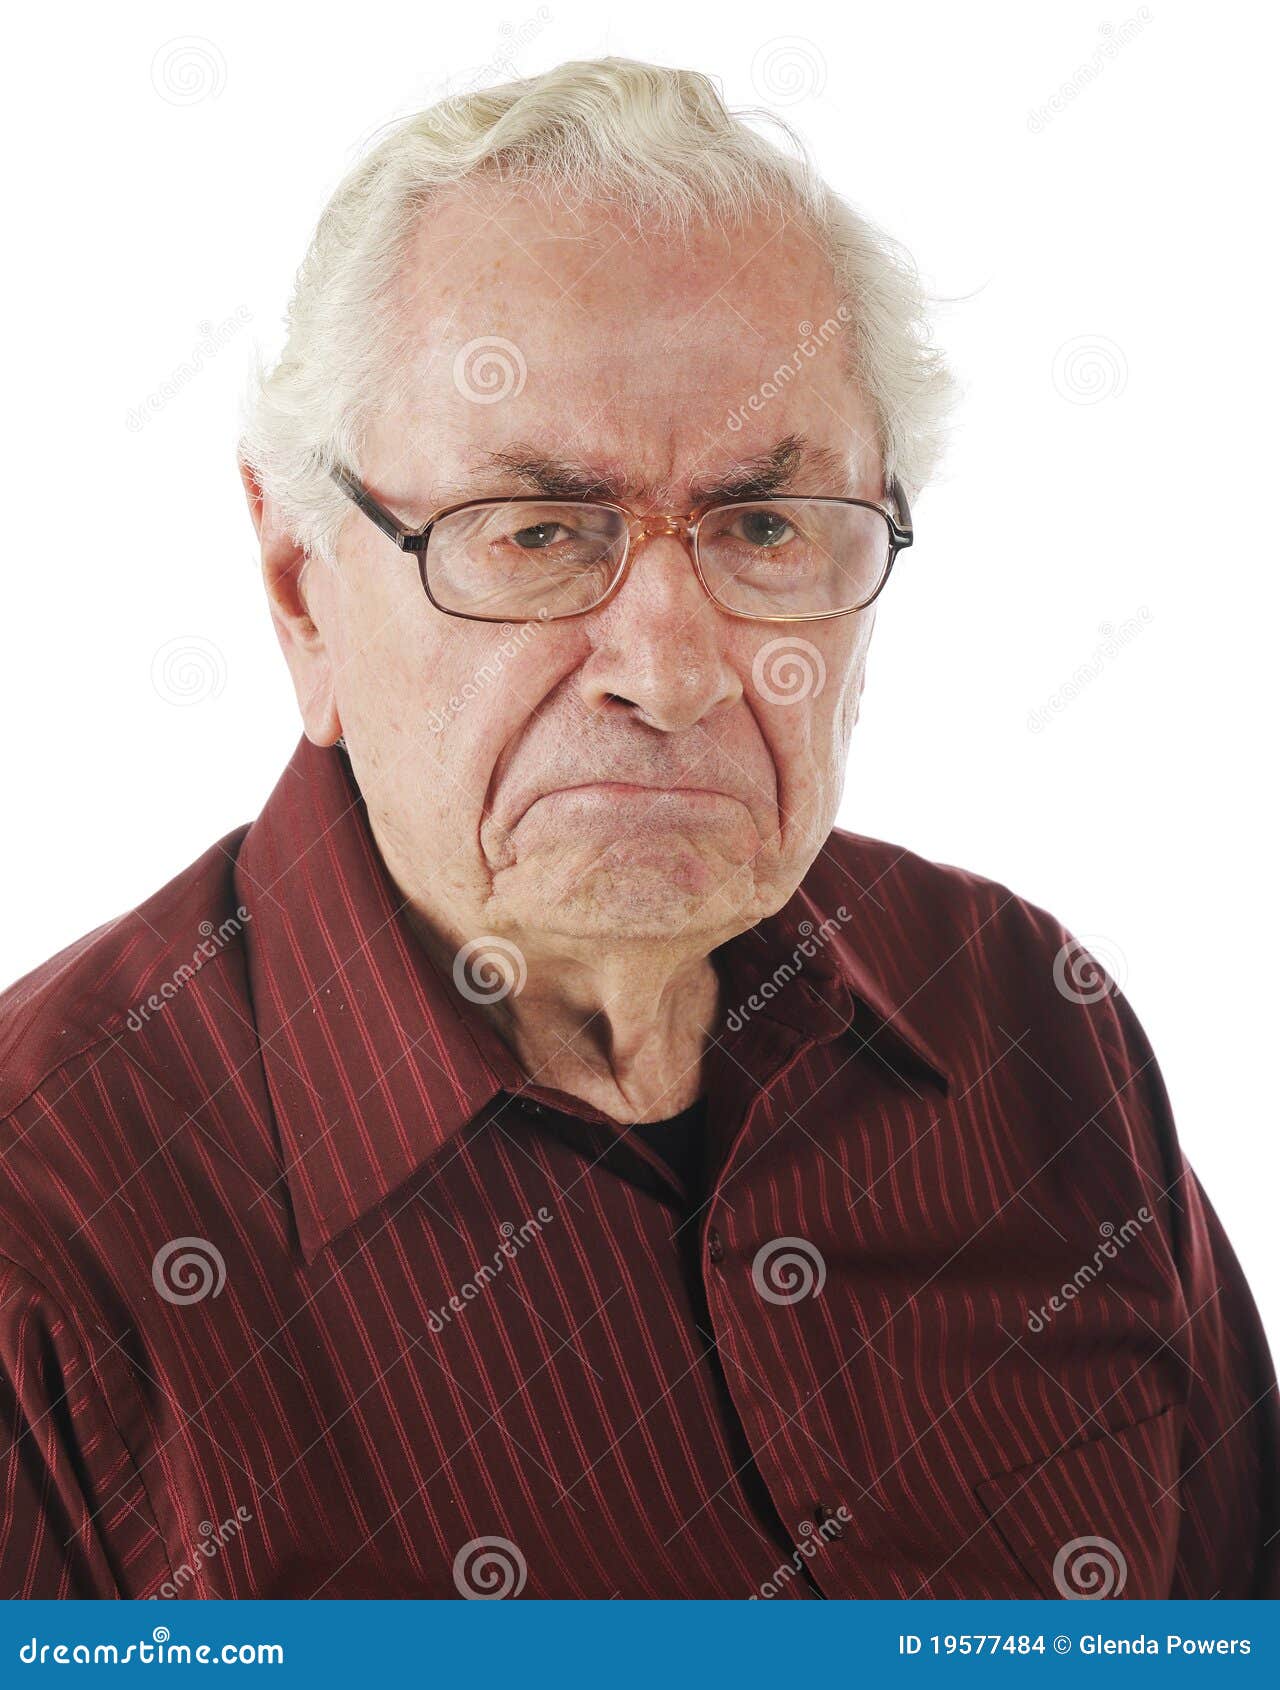 A Grumpy Old Man. Closeup portrait of a very grumpy senior man.